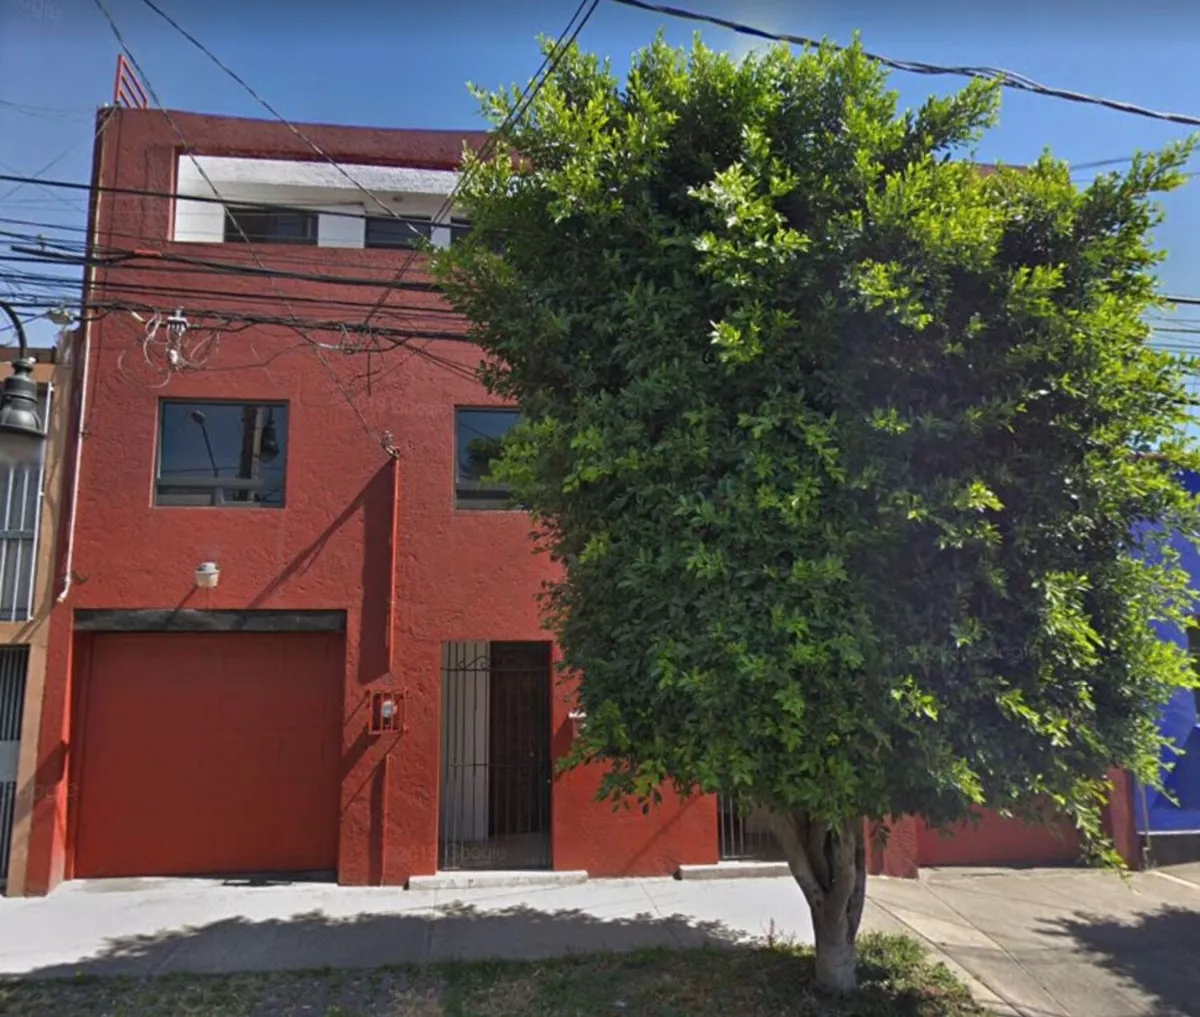 Casa En Venta Vicente Guerrero # 51, Col. Del Carmen, Alc. Coyoacan, Cp. 04100 Mlrc68